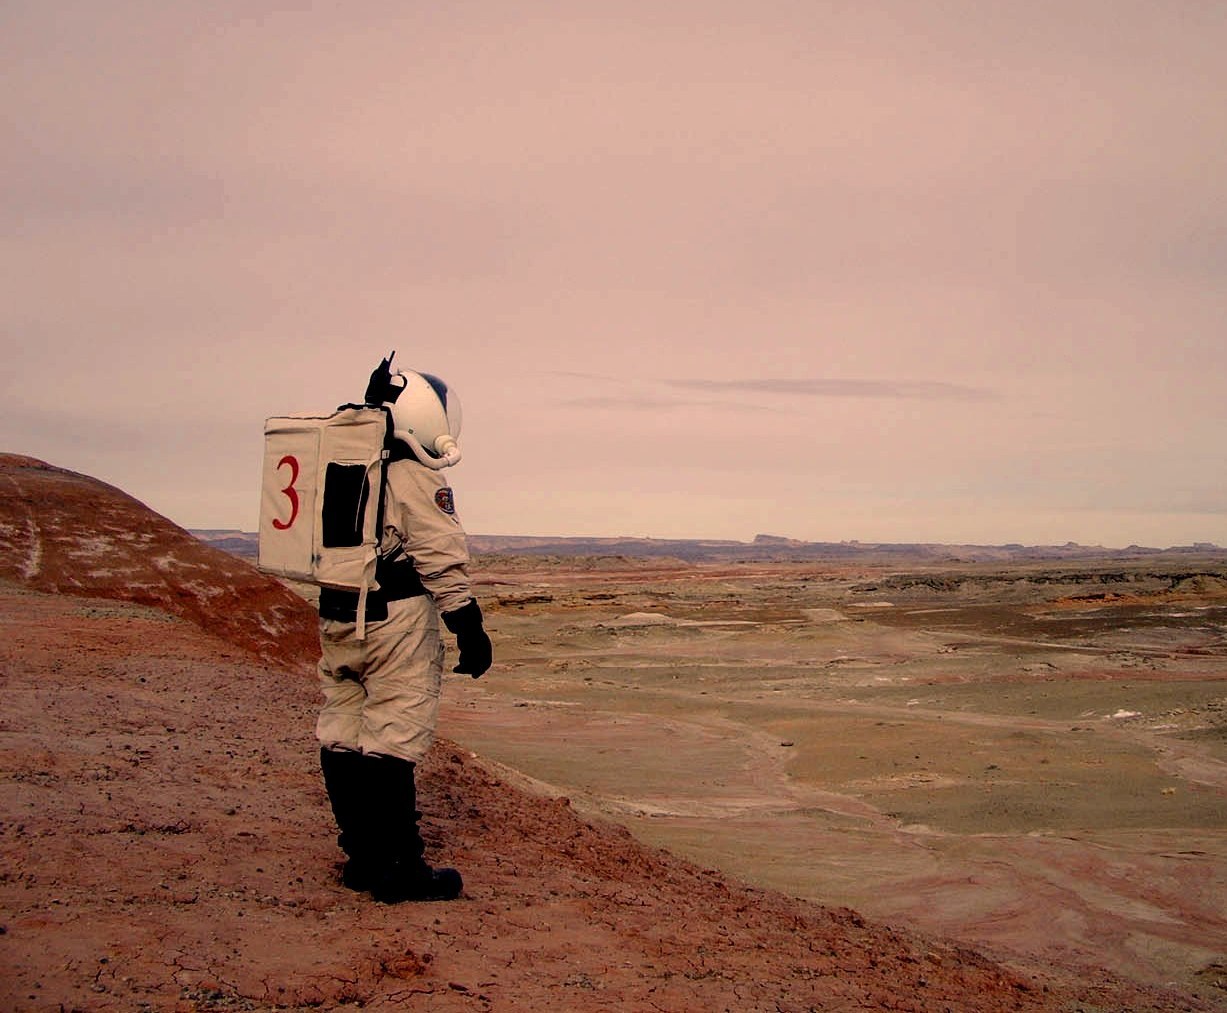 Human landing on Mars rendering [Credit: The Mars Society]